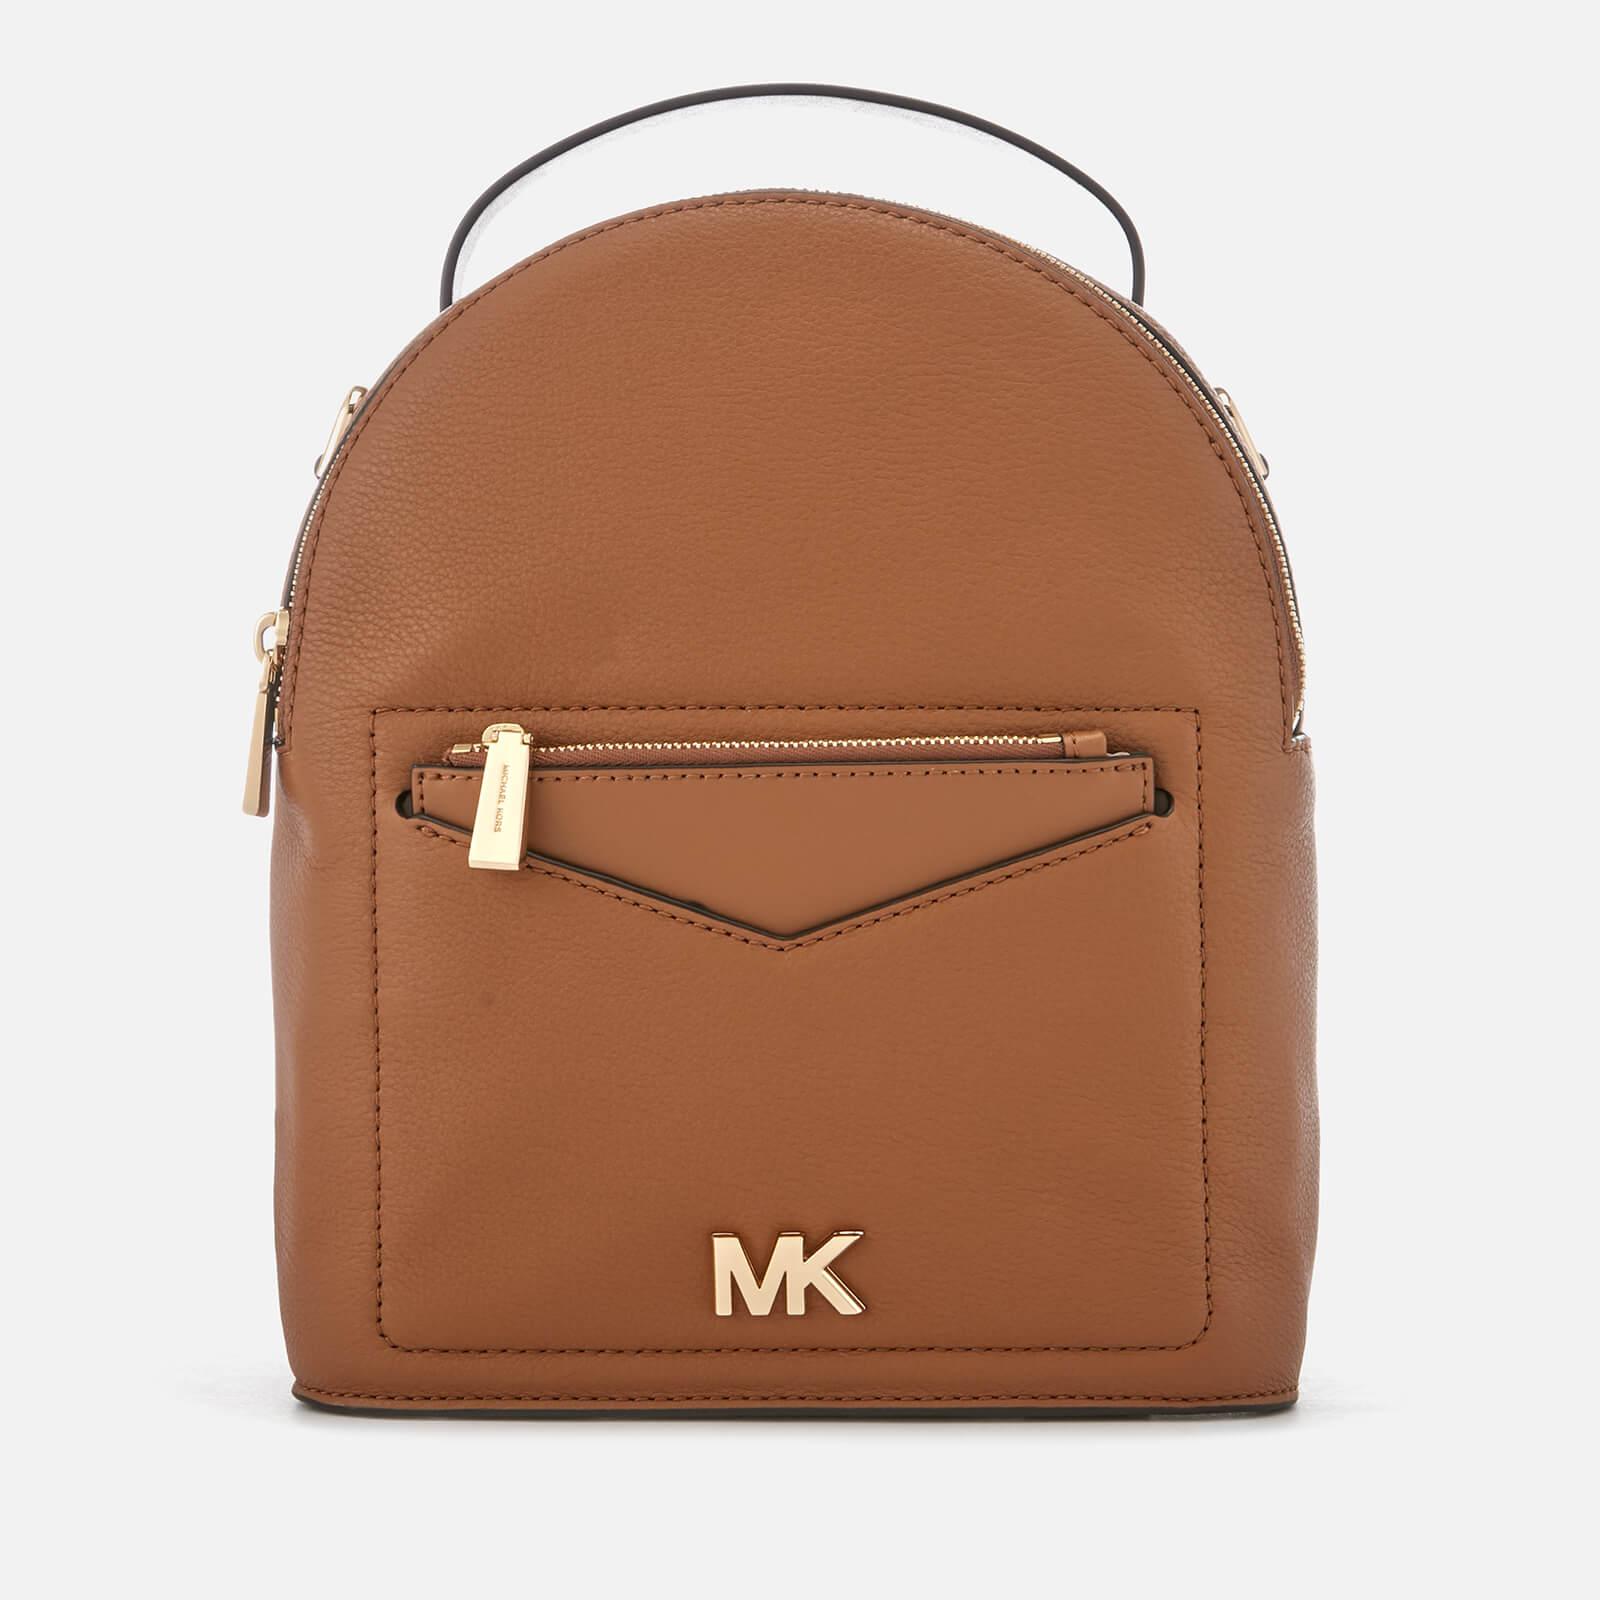 mk convertible backpack